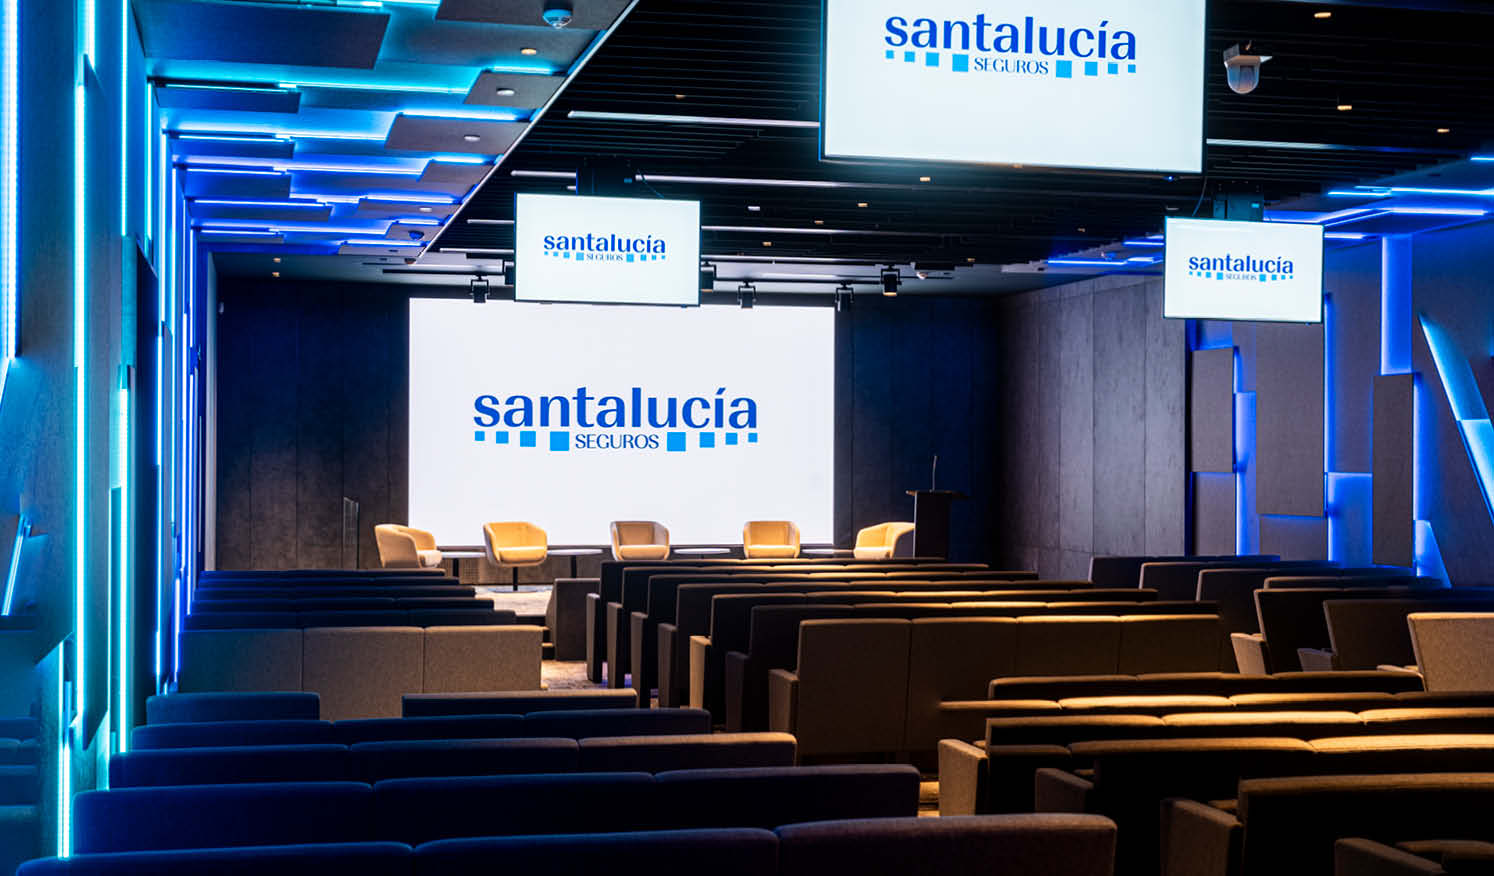 Santalucía_Auditorio en edificio de oficinas, proyecto Design&Build de salón de actos corporativo